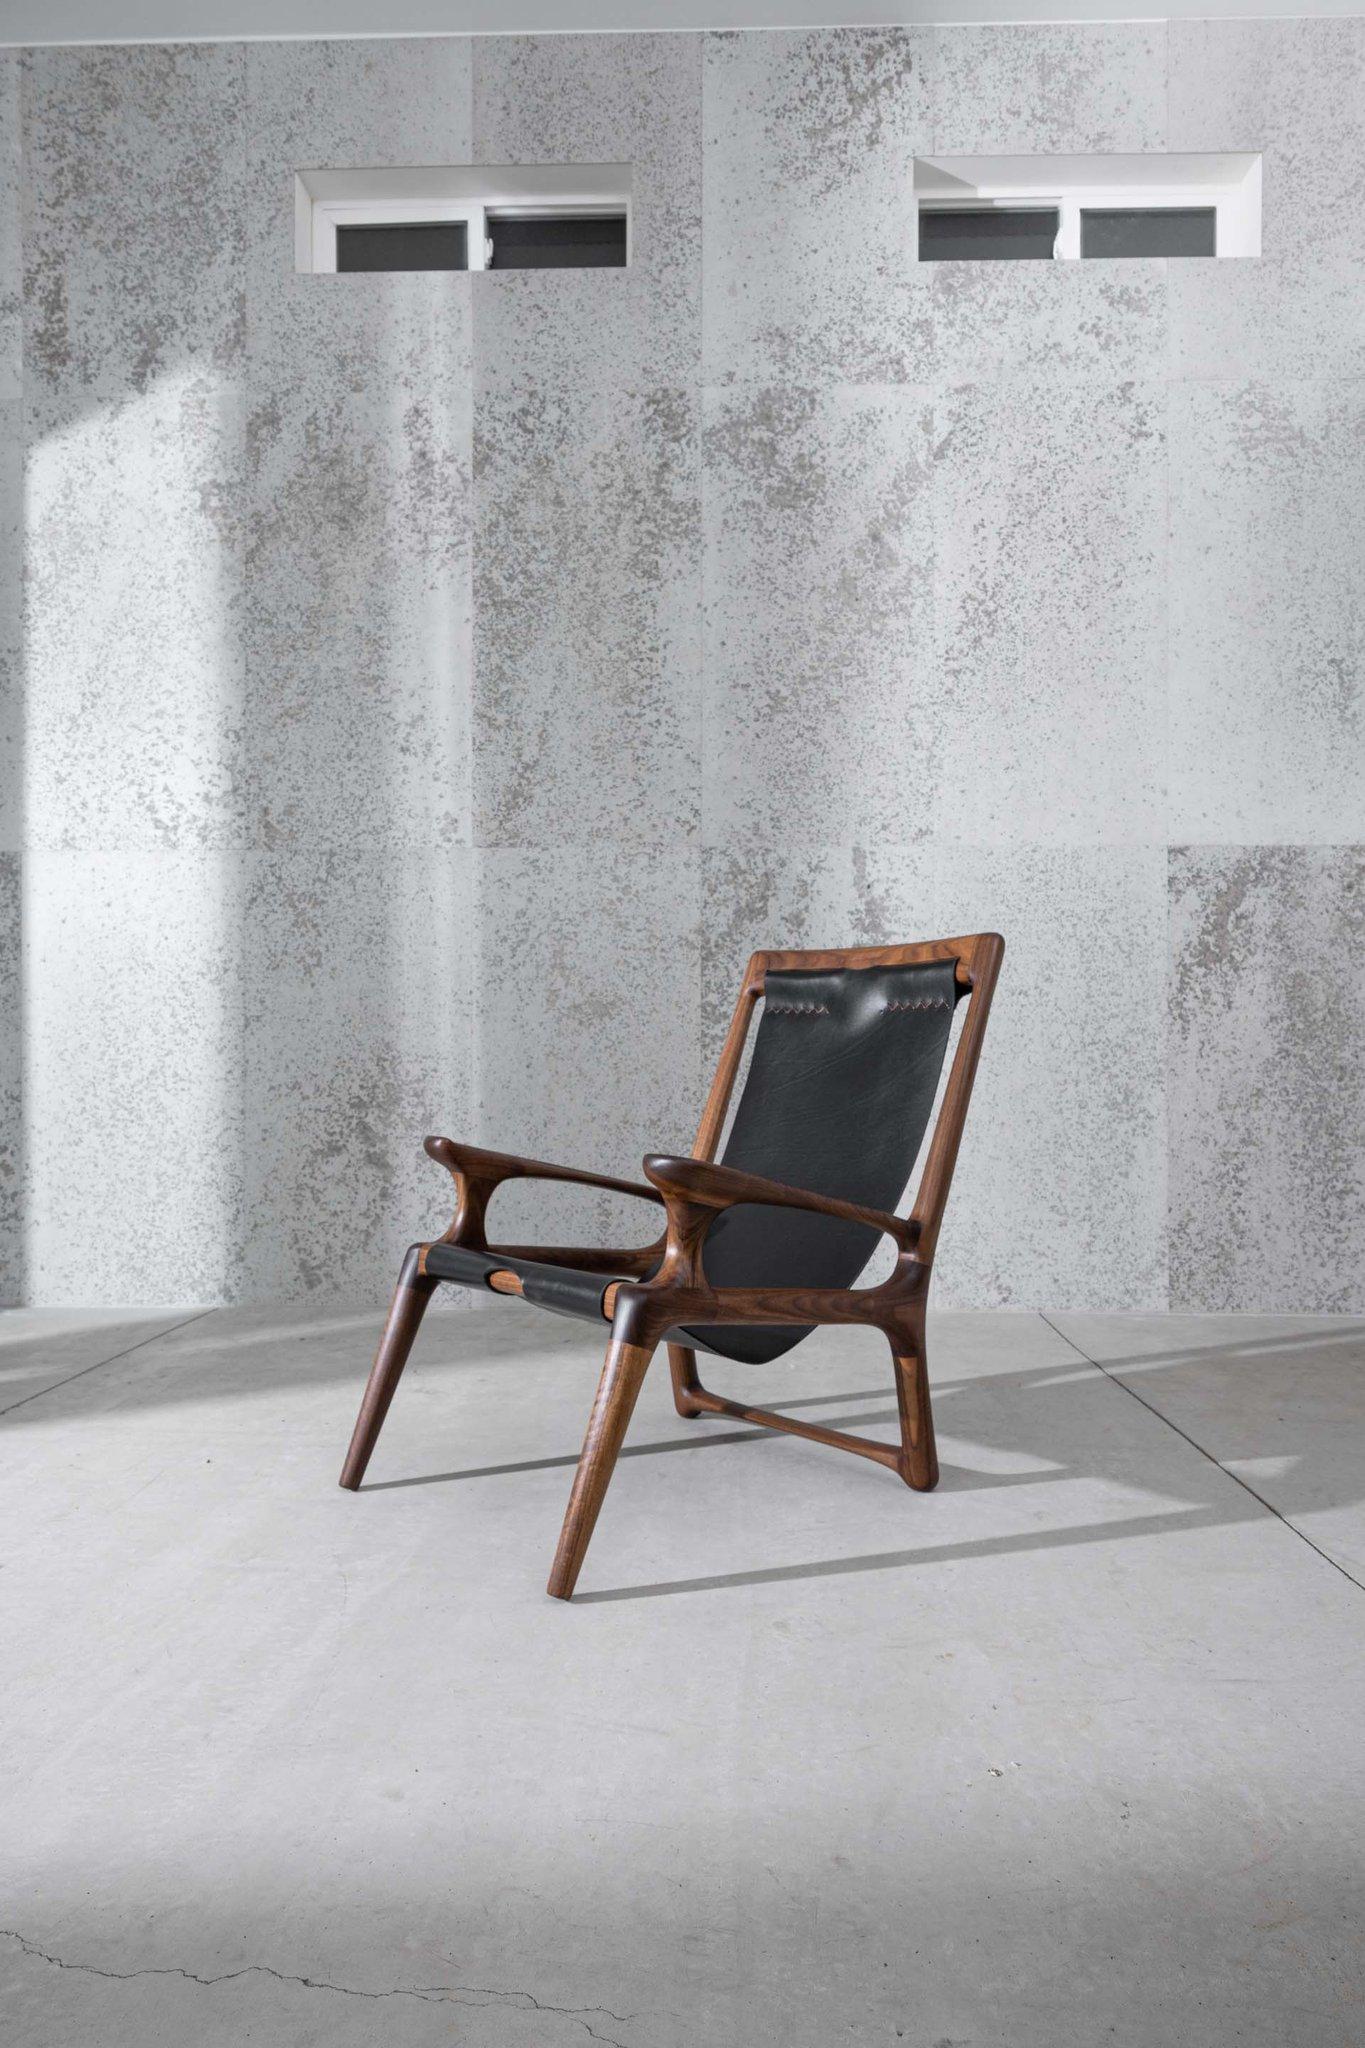 Walnut & leather sling chair mod 2 by Fernweh Woodworking
Dimensions: 
W 27